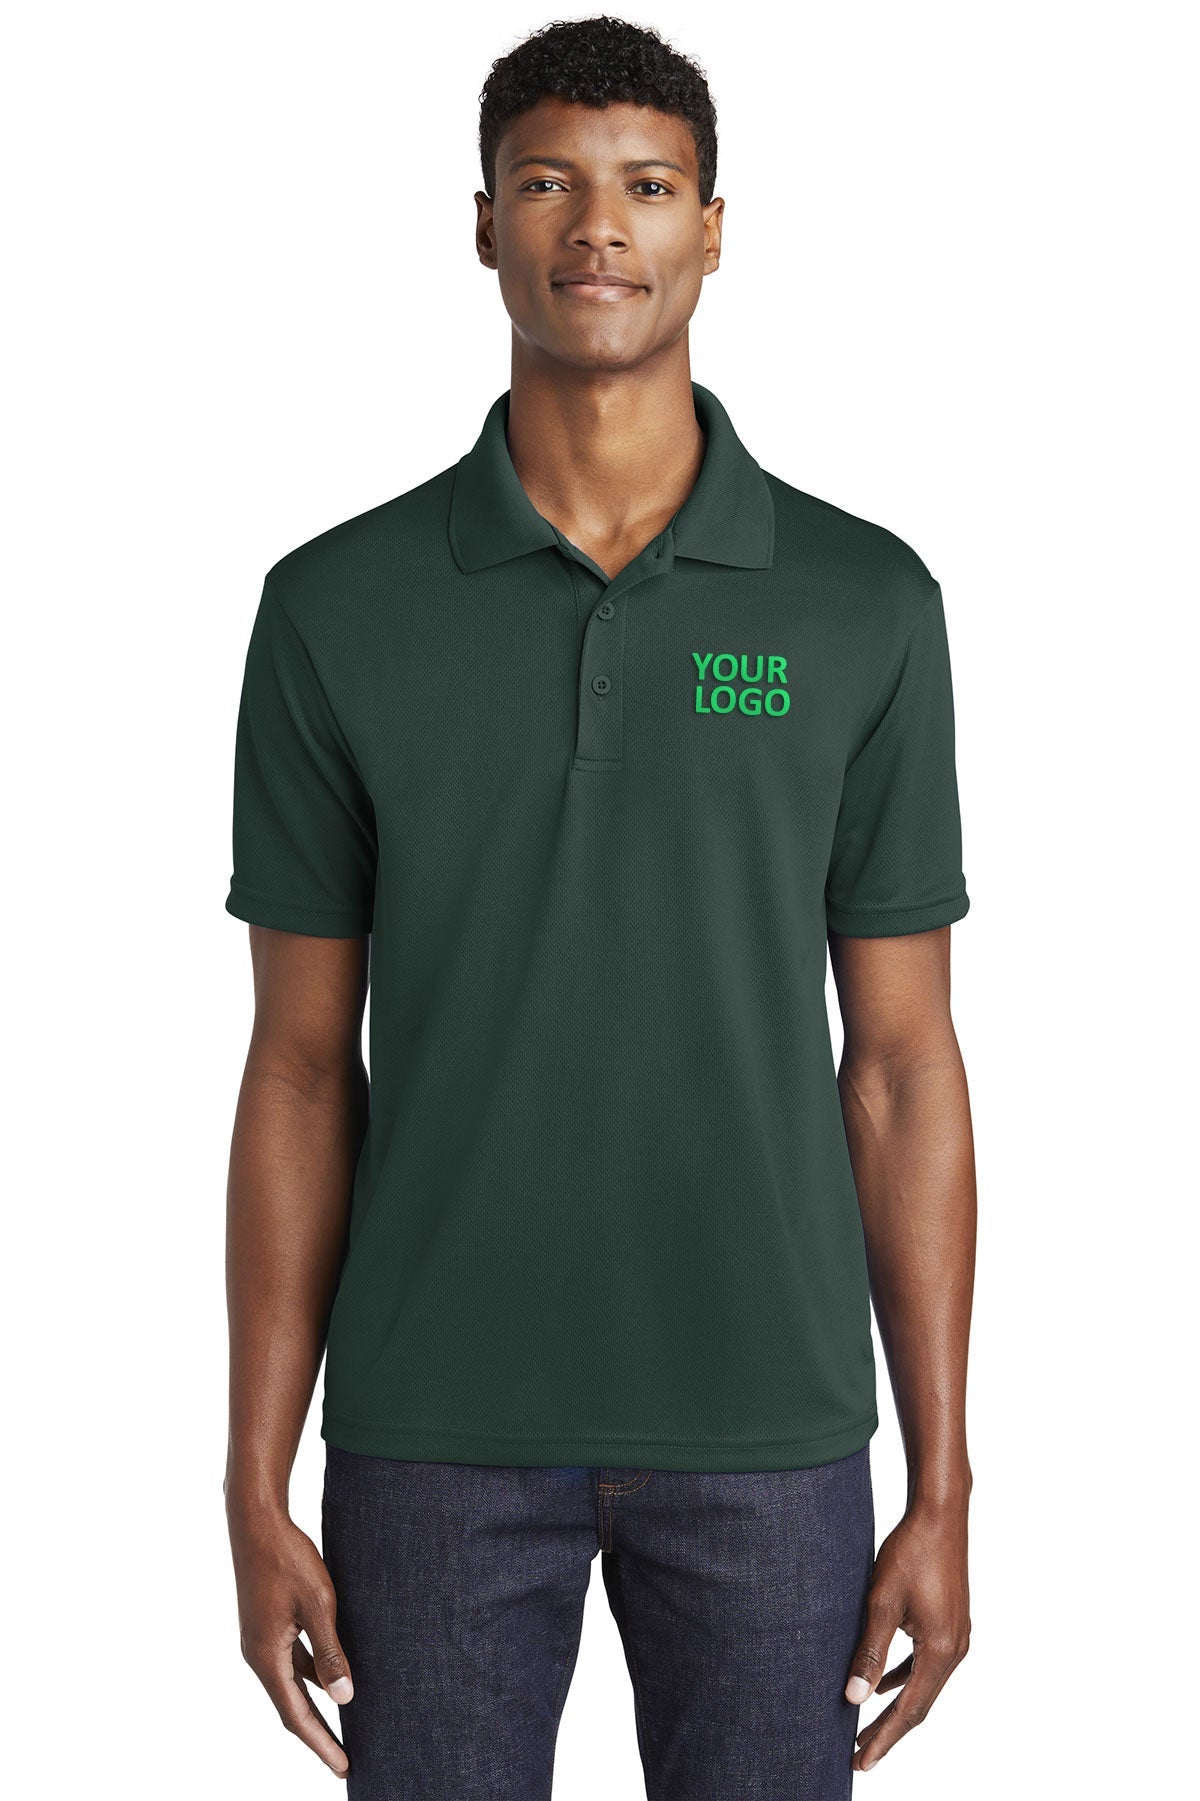 Sport-Tek Dark Forest Green ST640 custom made work polo shirts